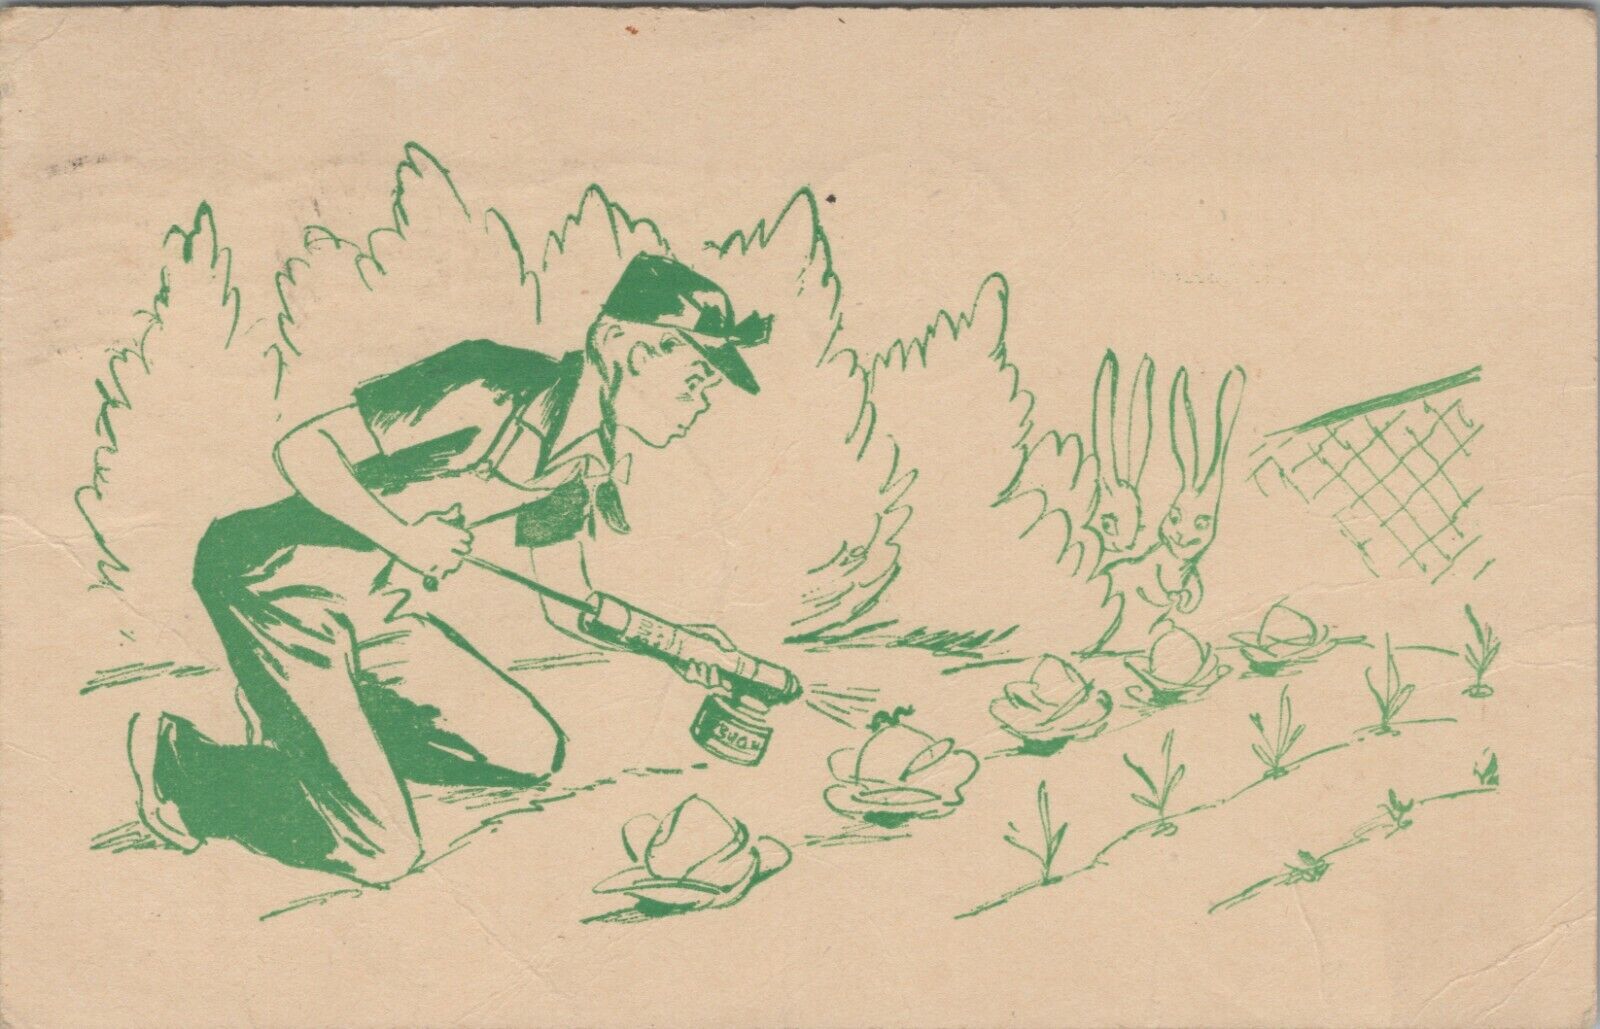 Canby Oregon Girl Scout camp girl lettuce rabbits postmark c1940s postcard A340